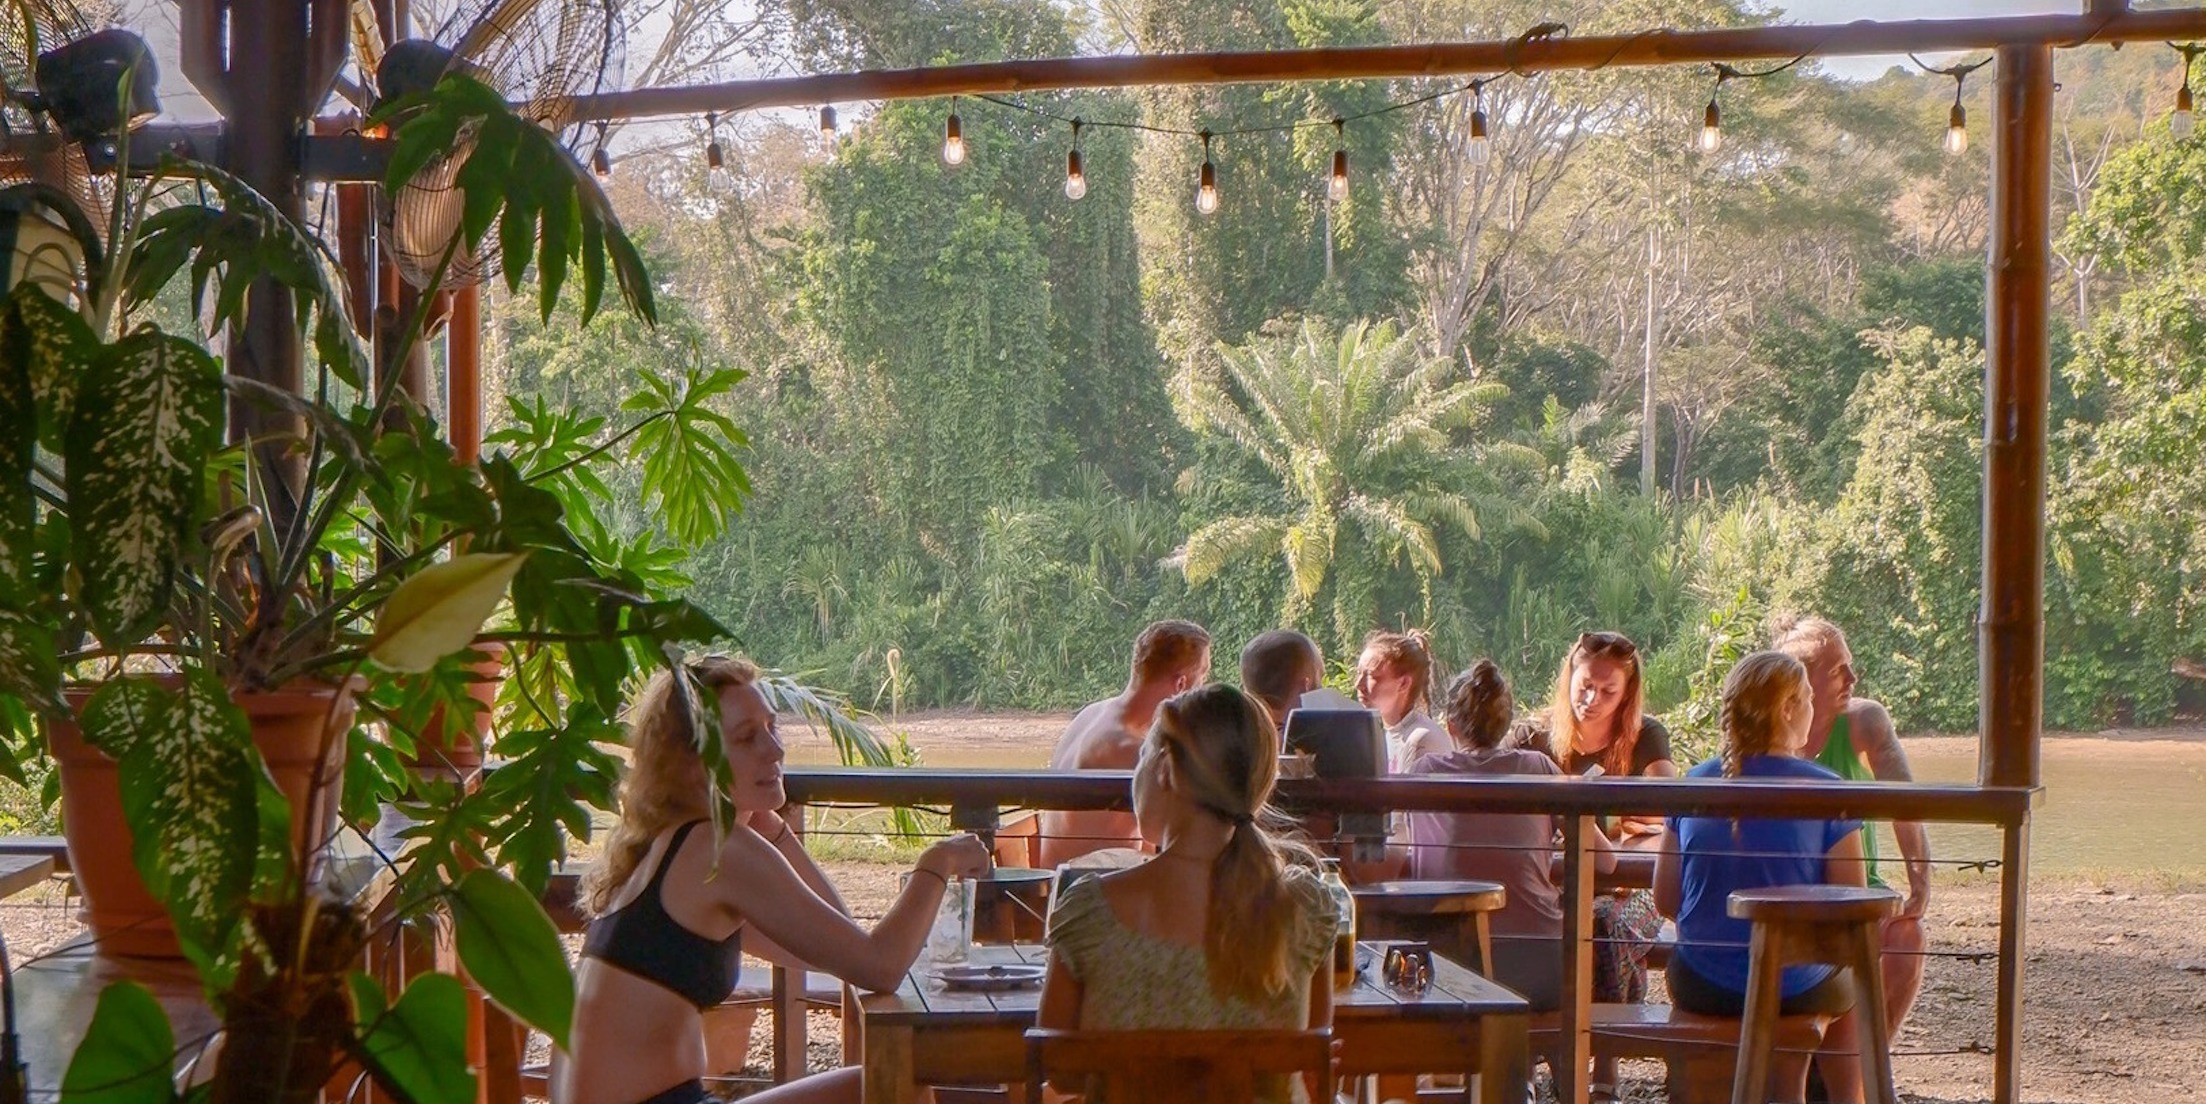 Cafe Mono Congo back deck overlooking Baru River & Playa Dominical